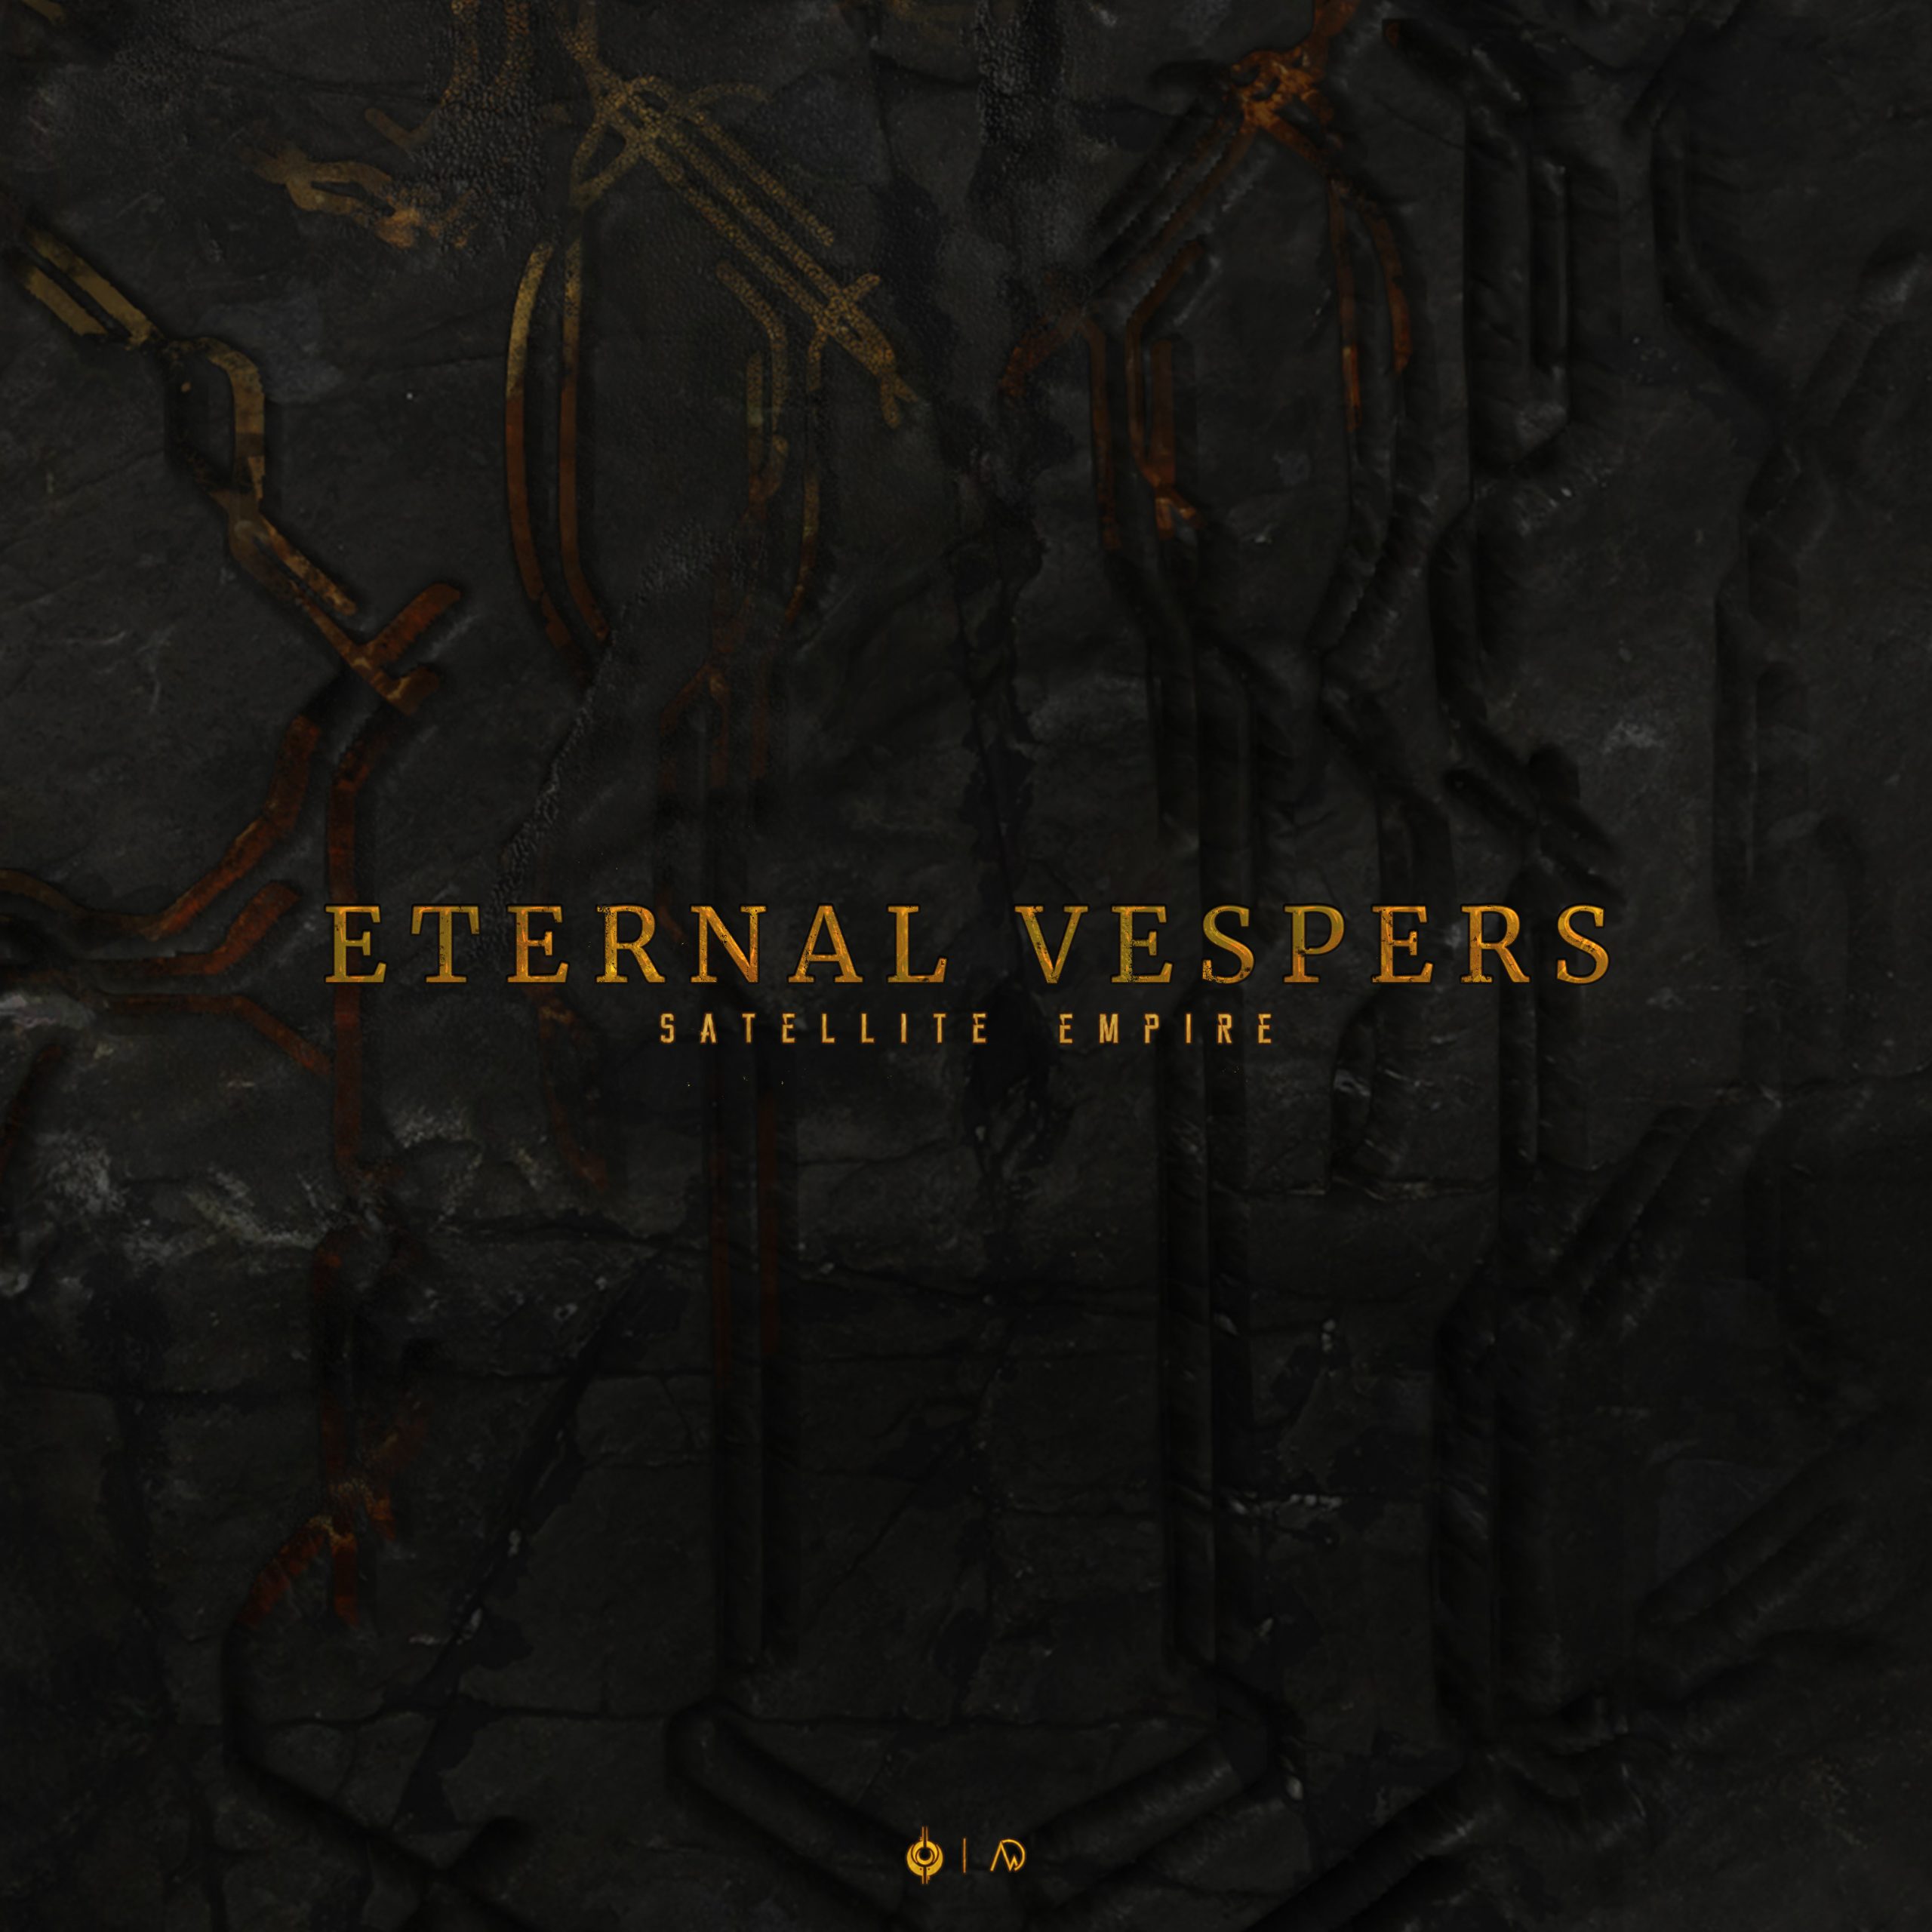 Satellite Empires Return with New Single “Eternal Vespers”